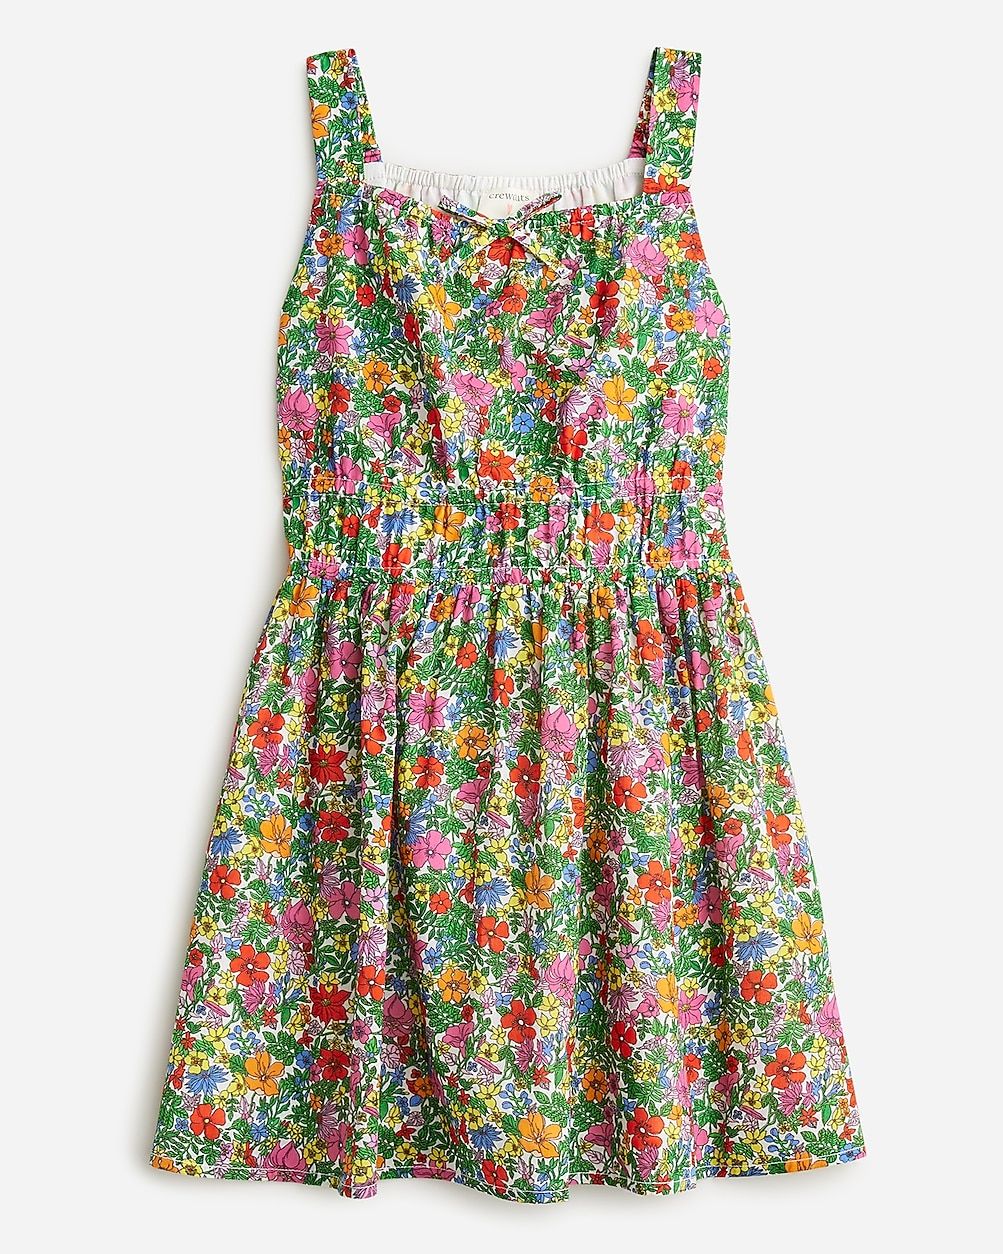 Girls' smocked-waist dress in floral cotton voile | J.Crew US